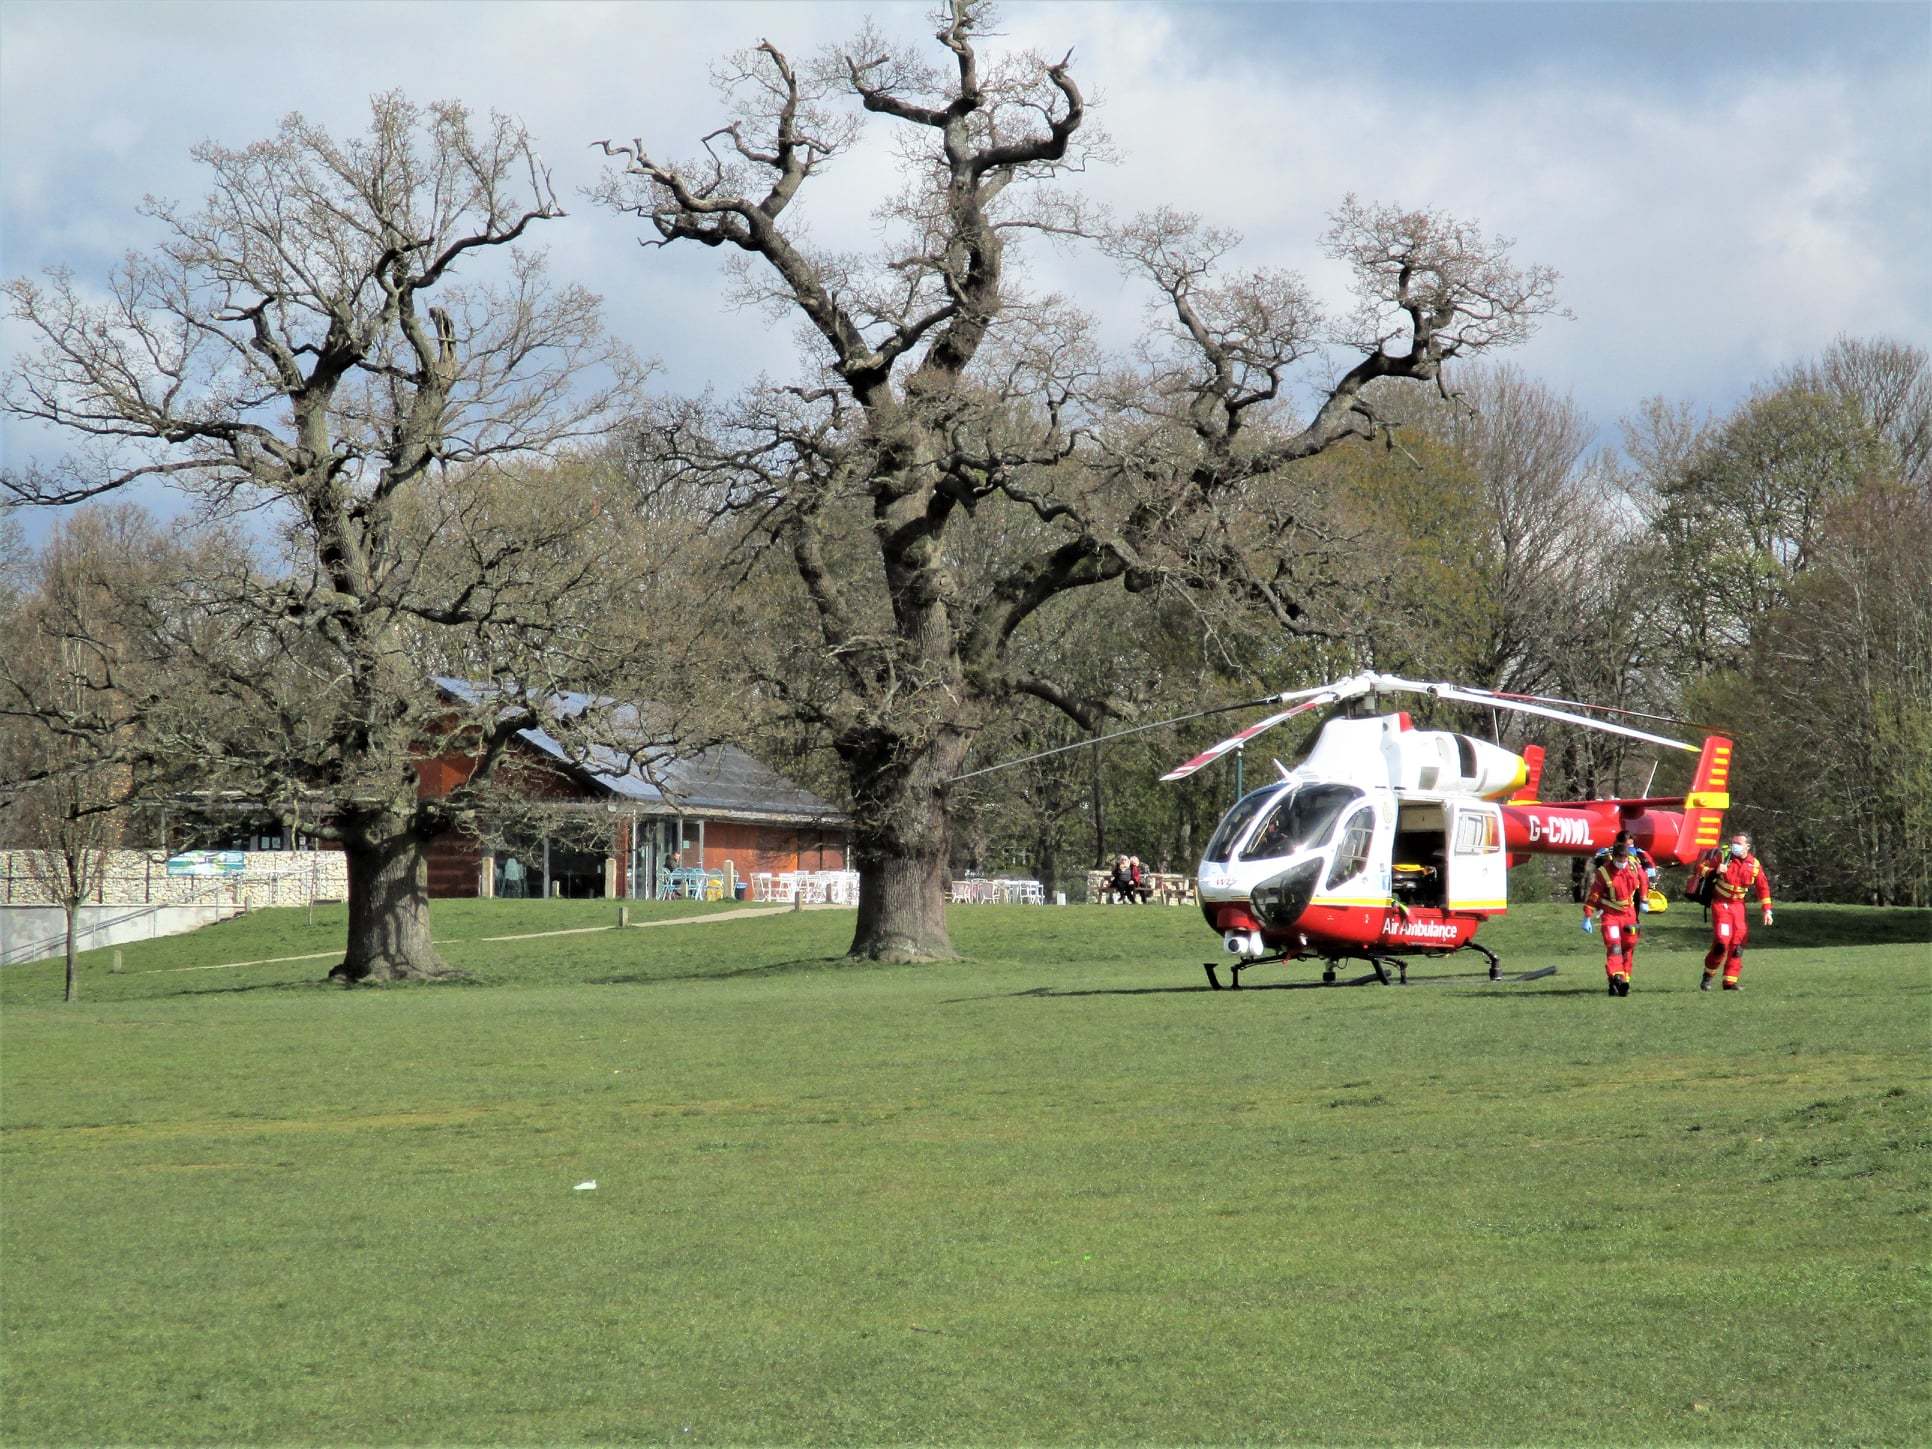 An air ambulance at Cassiobury Park (Photo: Roger Middleton)